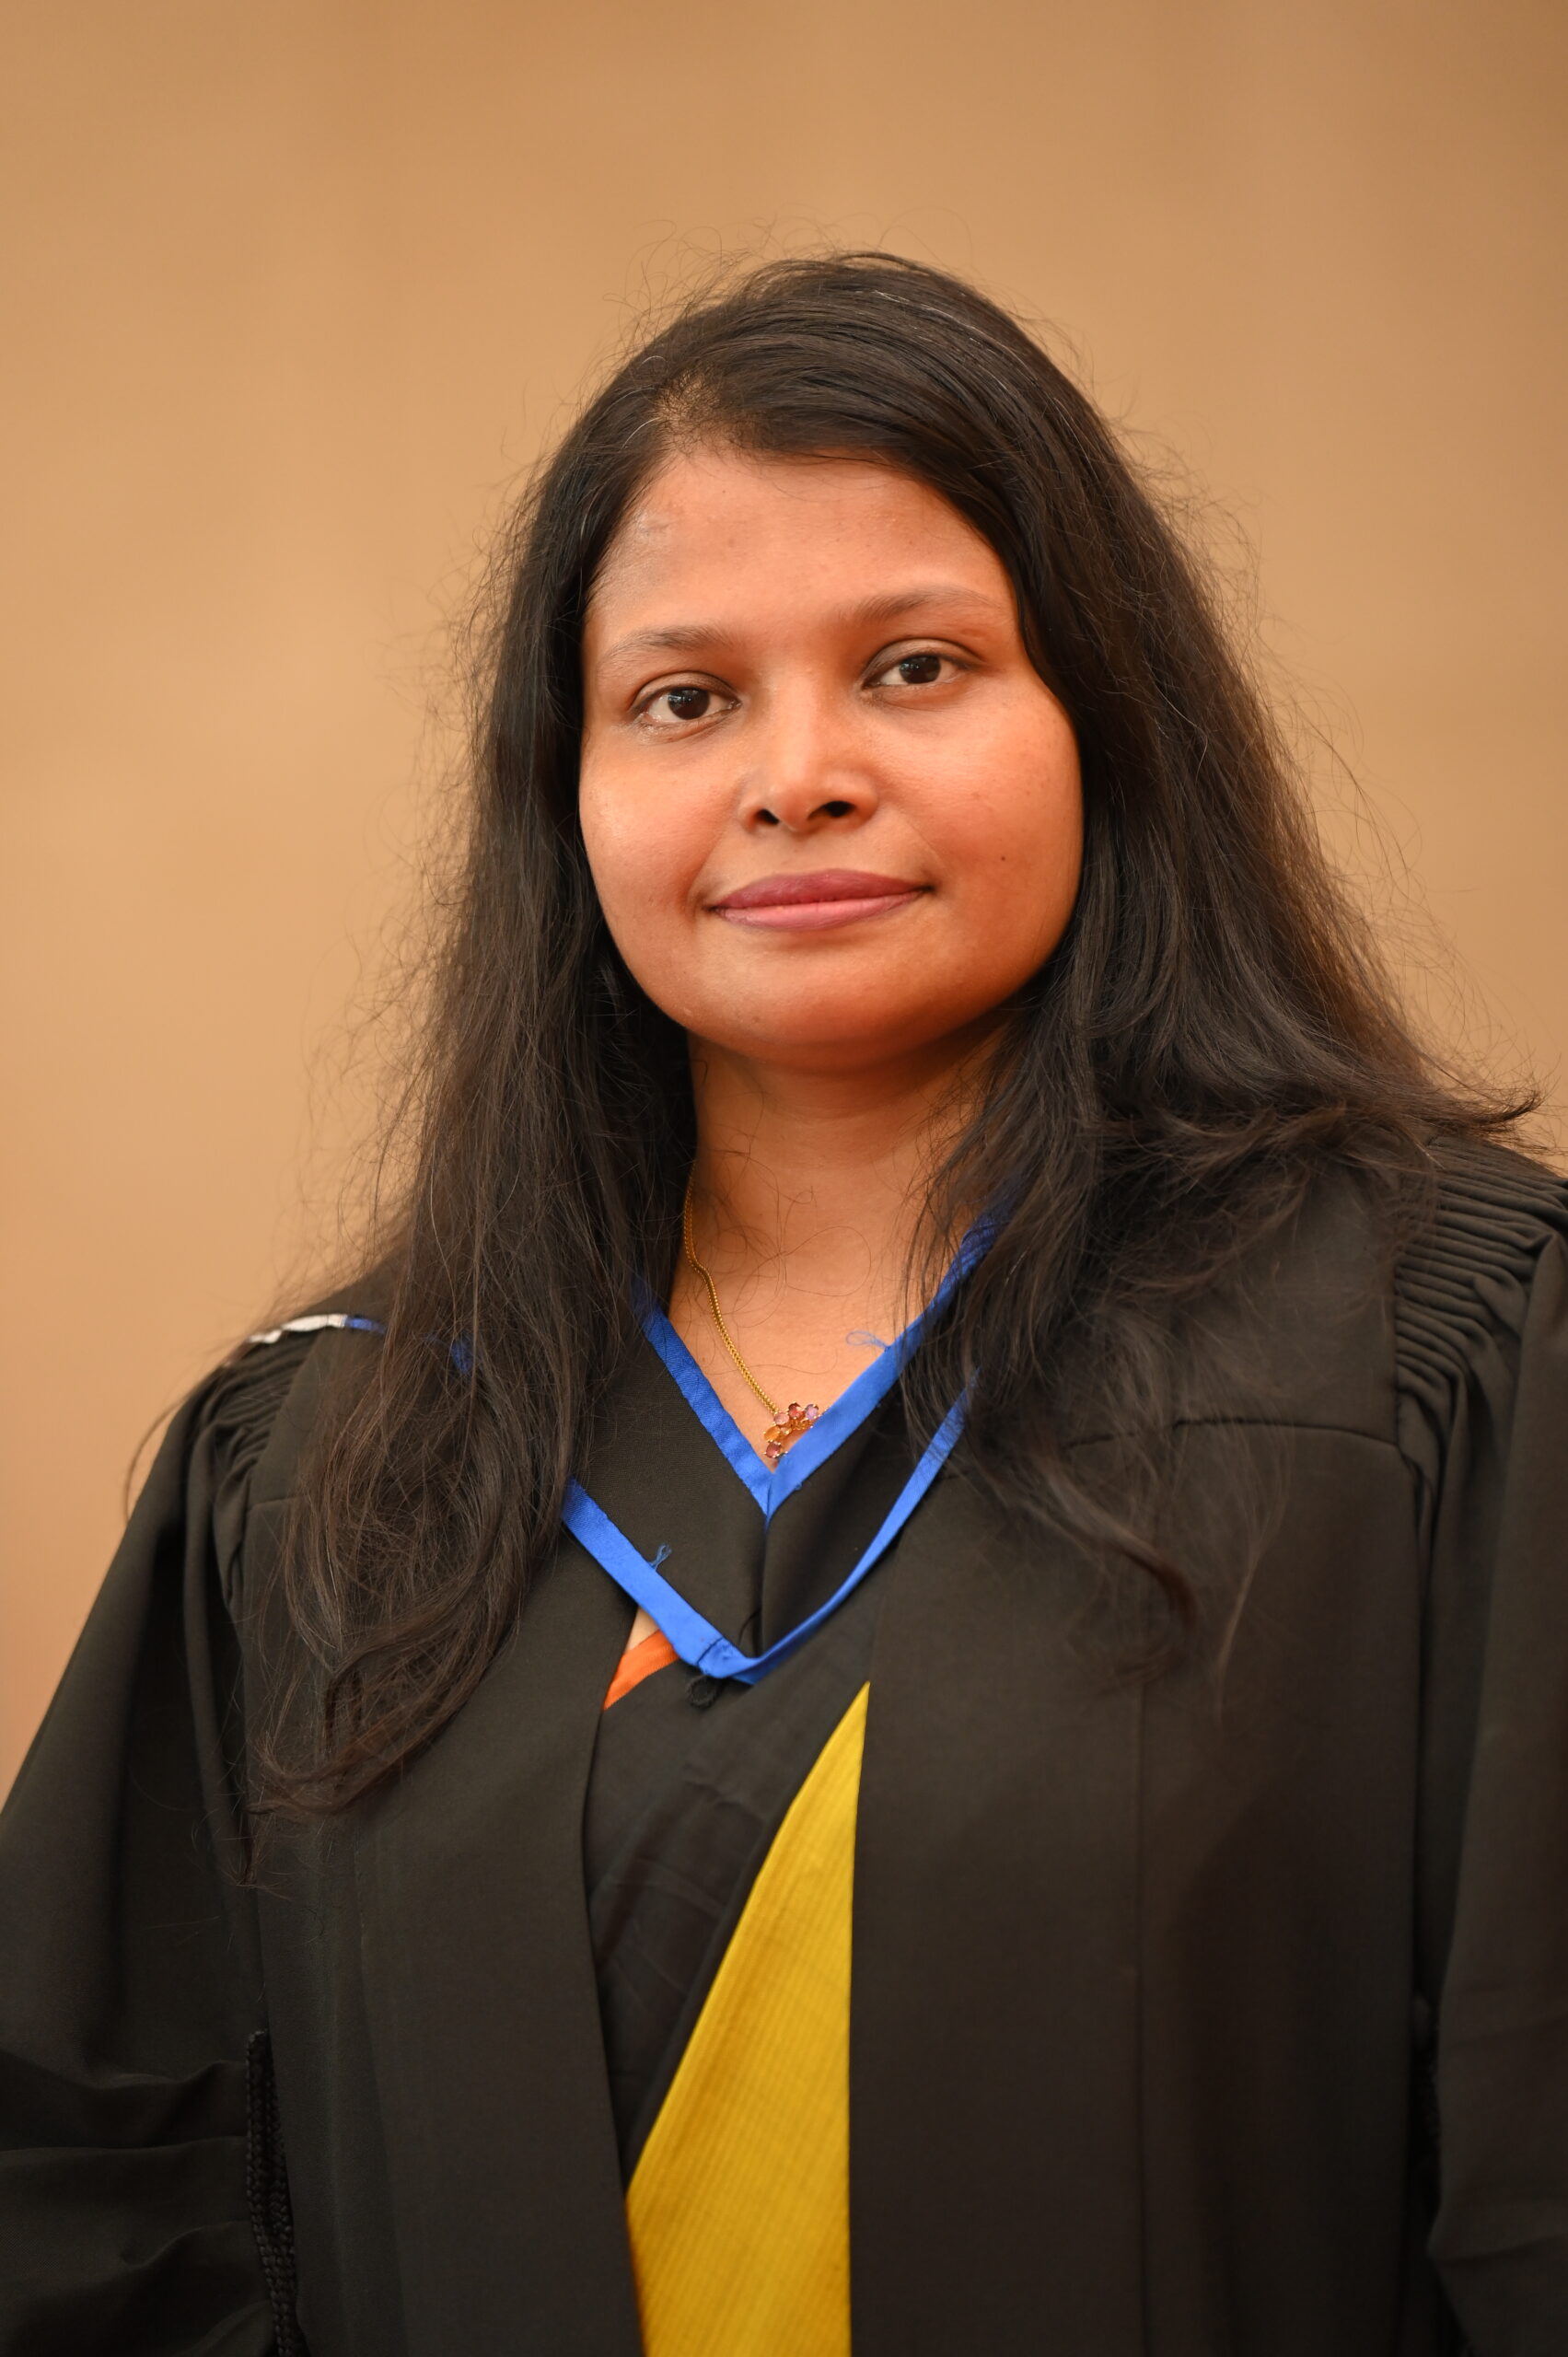 Ms. Suraji Madusha Jayasena